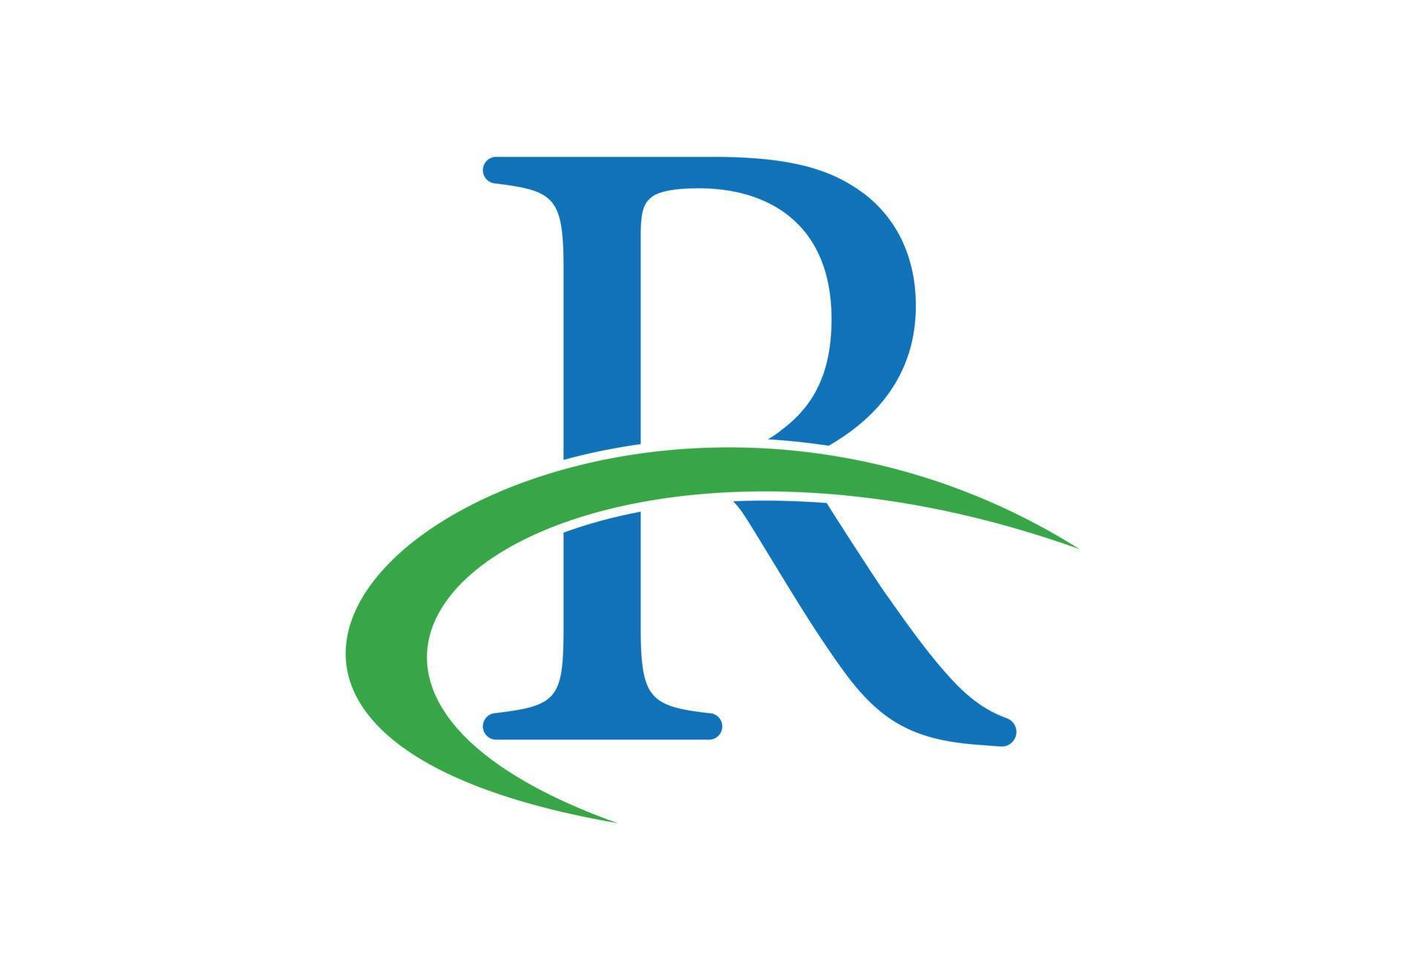 Initial letter R logo design template, Vector illustration